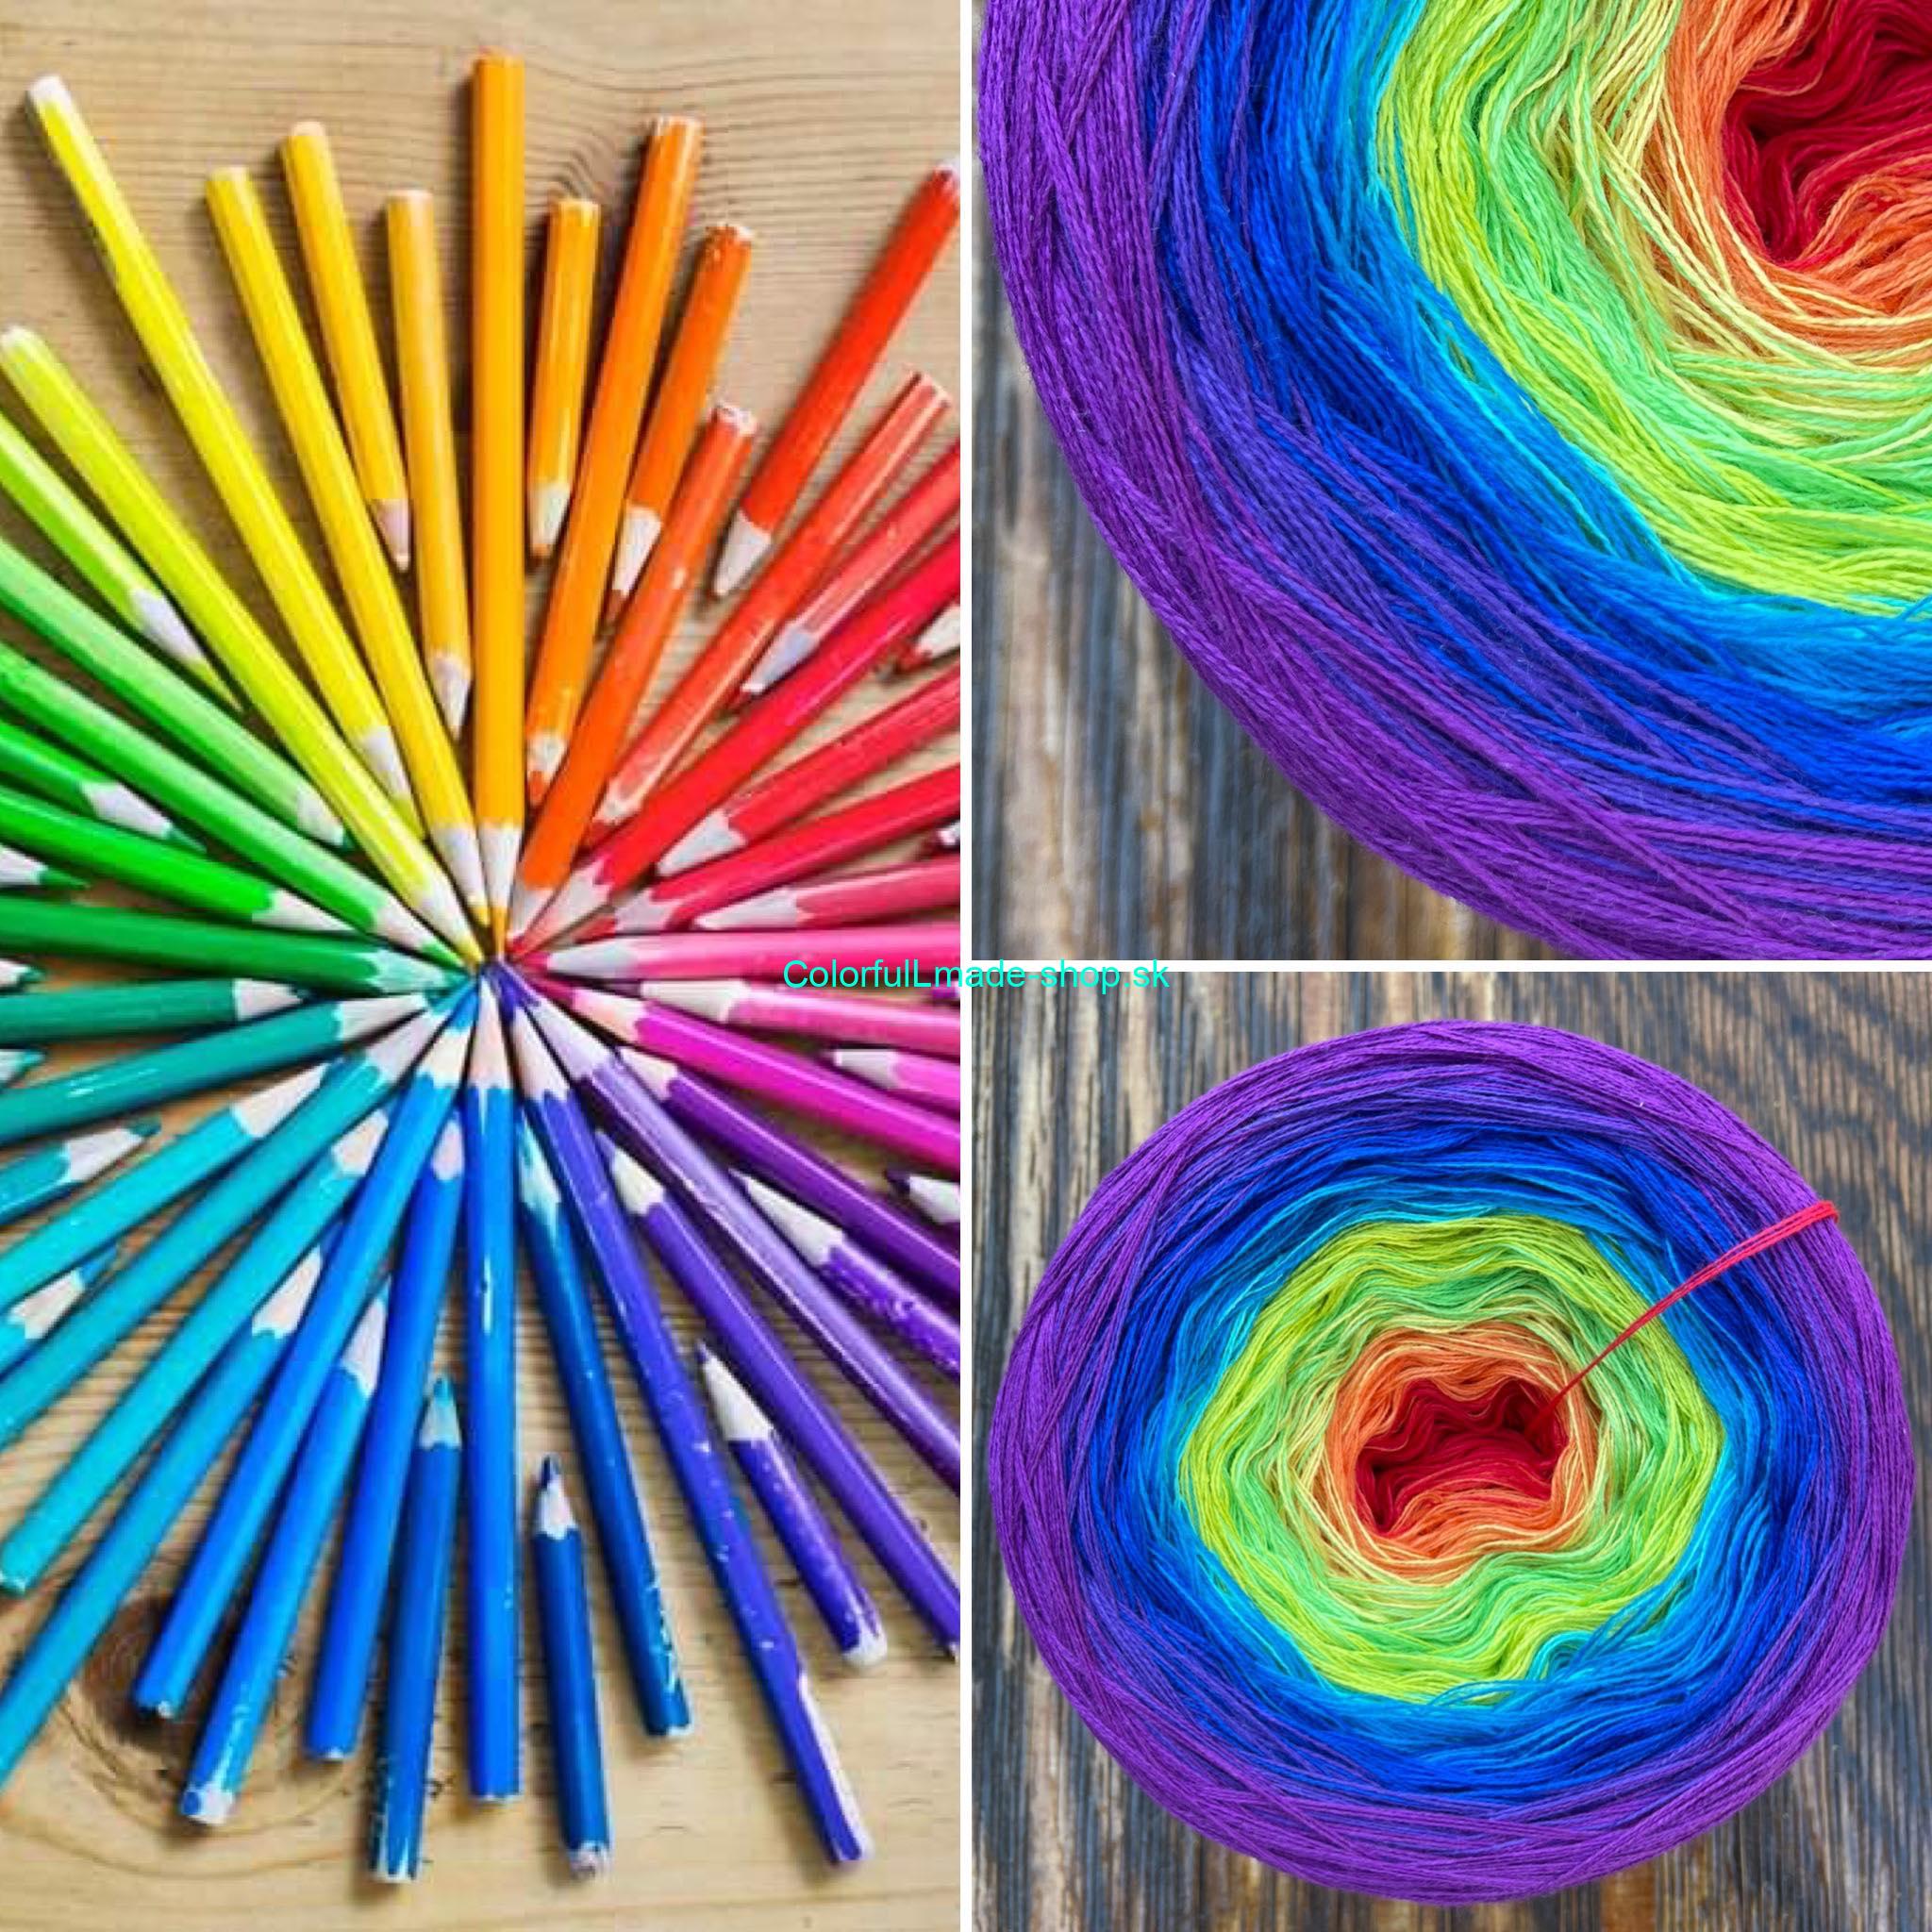 Magic Beauty - Crayons 350g/1700m